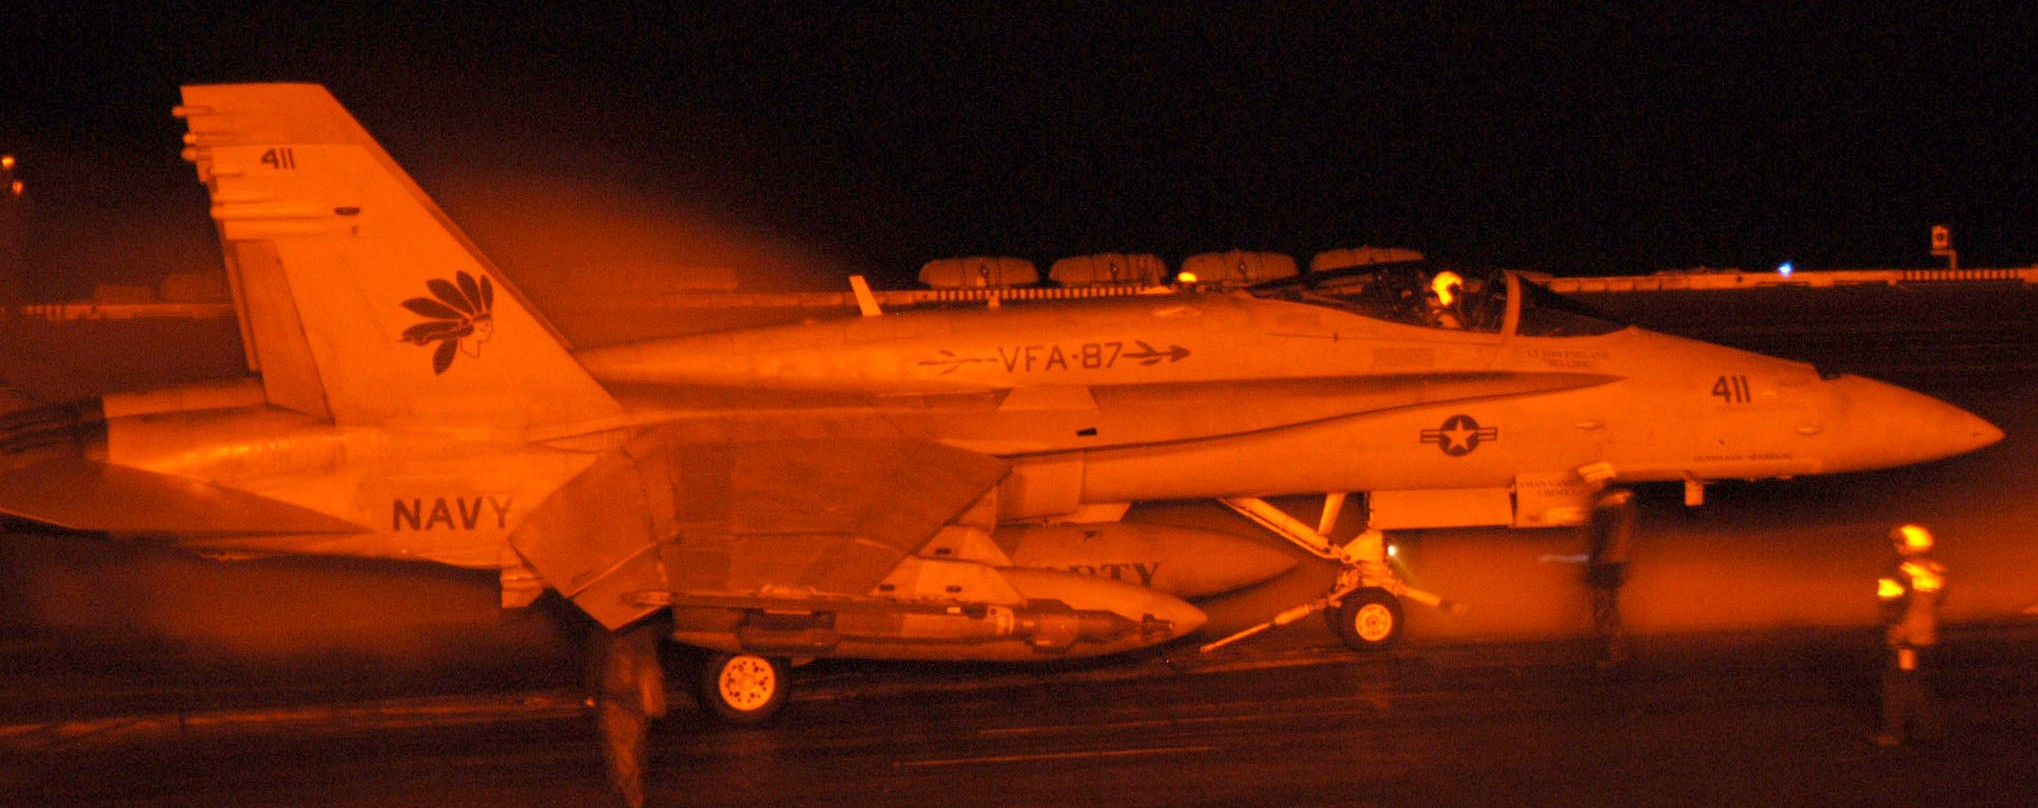 vfa-87 golden warriors strike fighter squadron f/a-18c hornet cvw-8 uss theodore roosevelt cvn-71 us navy 141p